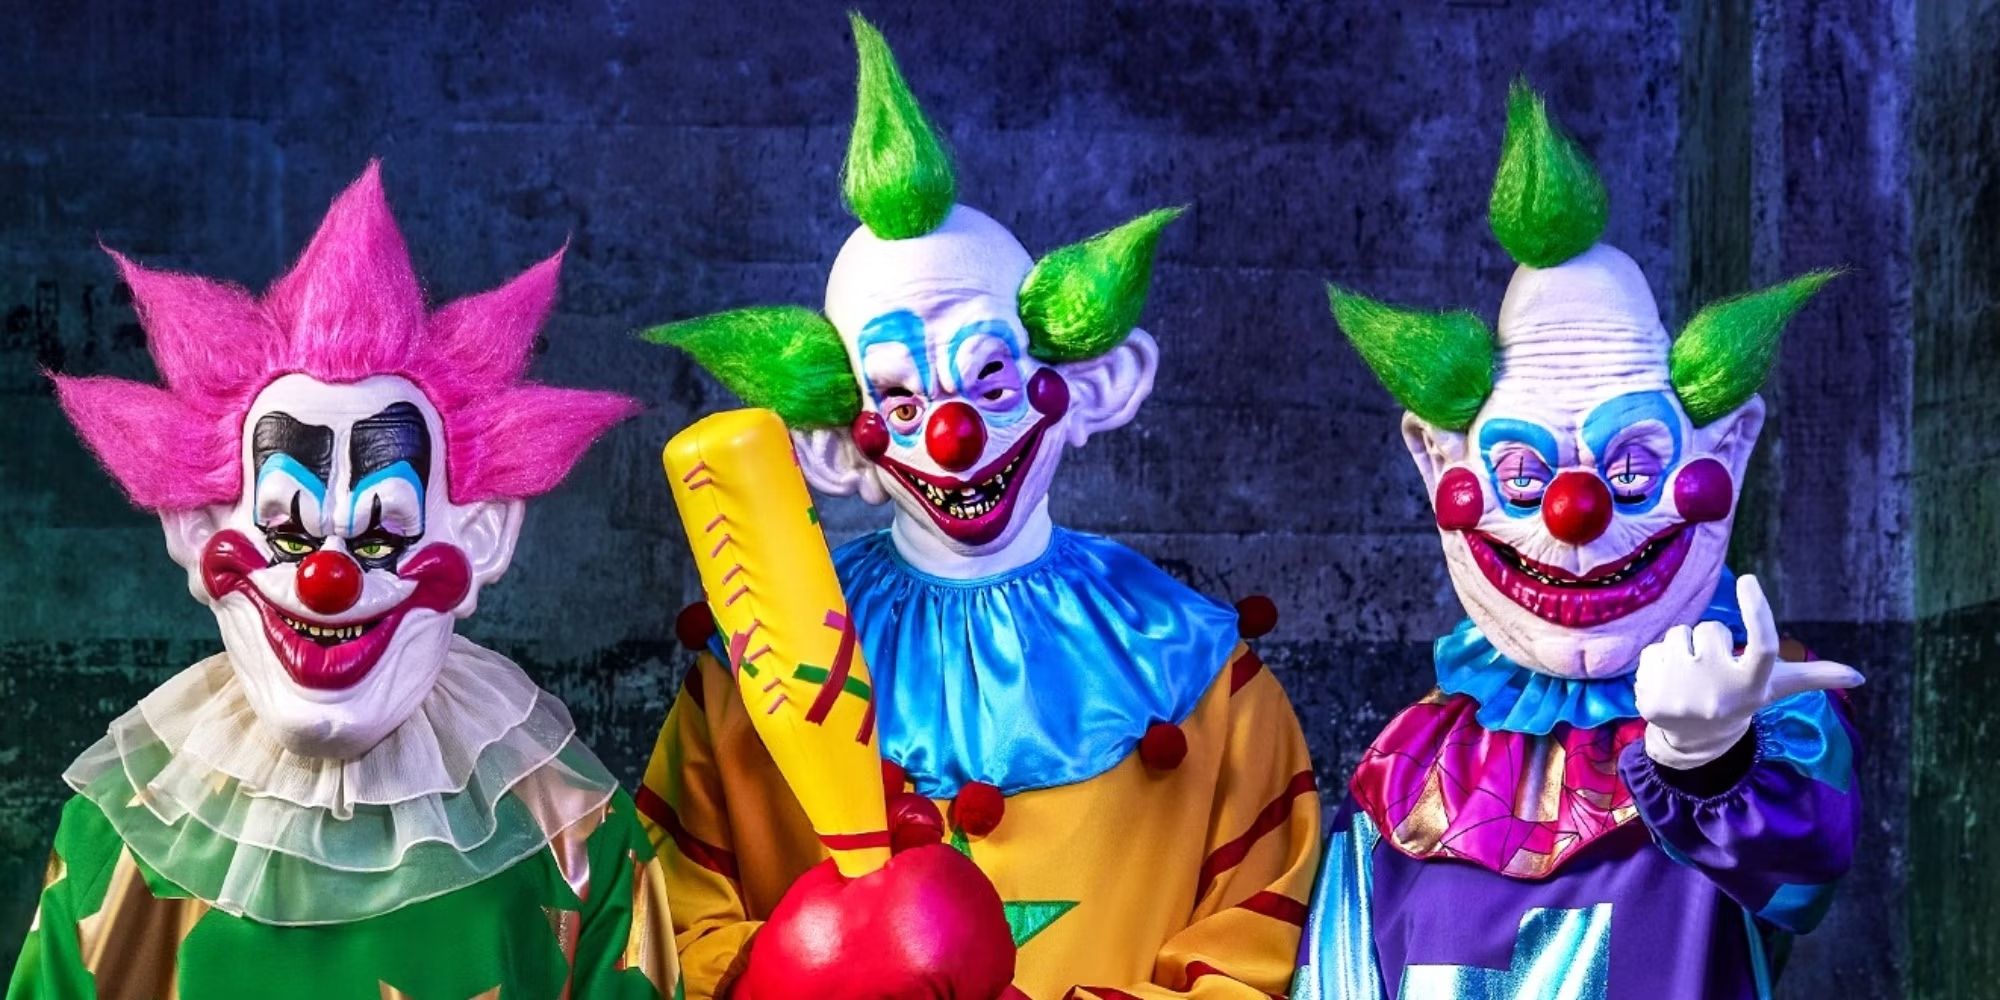 Killer klowns from outer. Killer Klowns from Outer Space. Клоуны-убийцы из космоса 1988. Killer Klowns from Outer Space 1988. Клоуны убийцы из космоса 2.